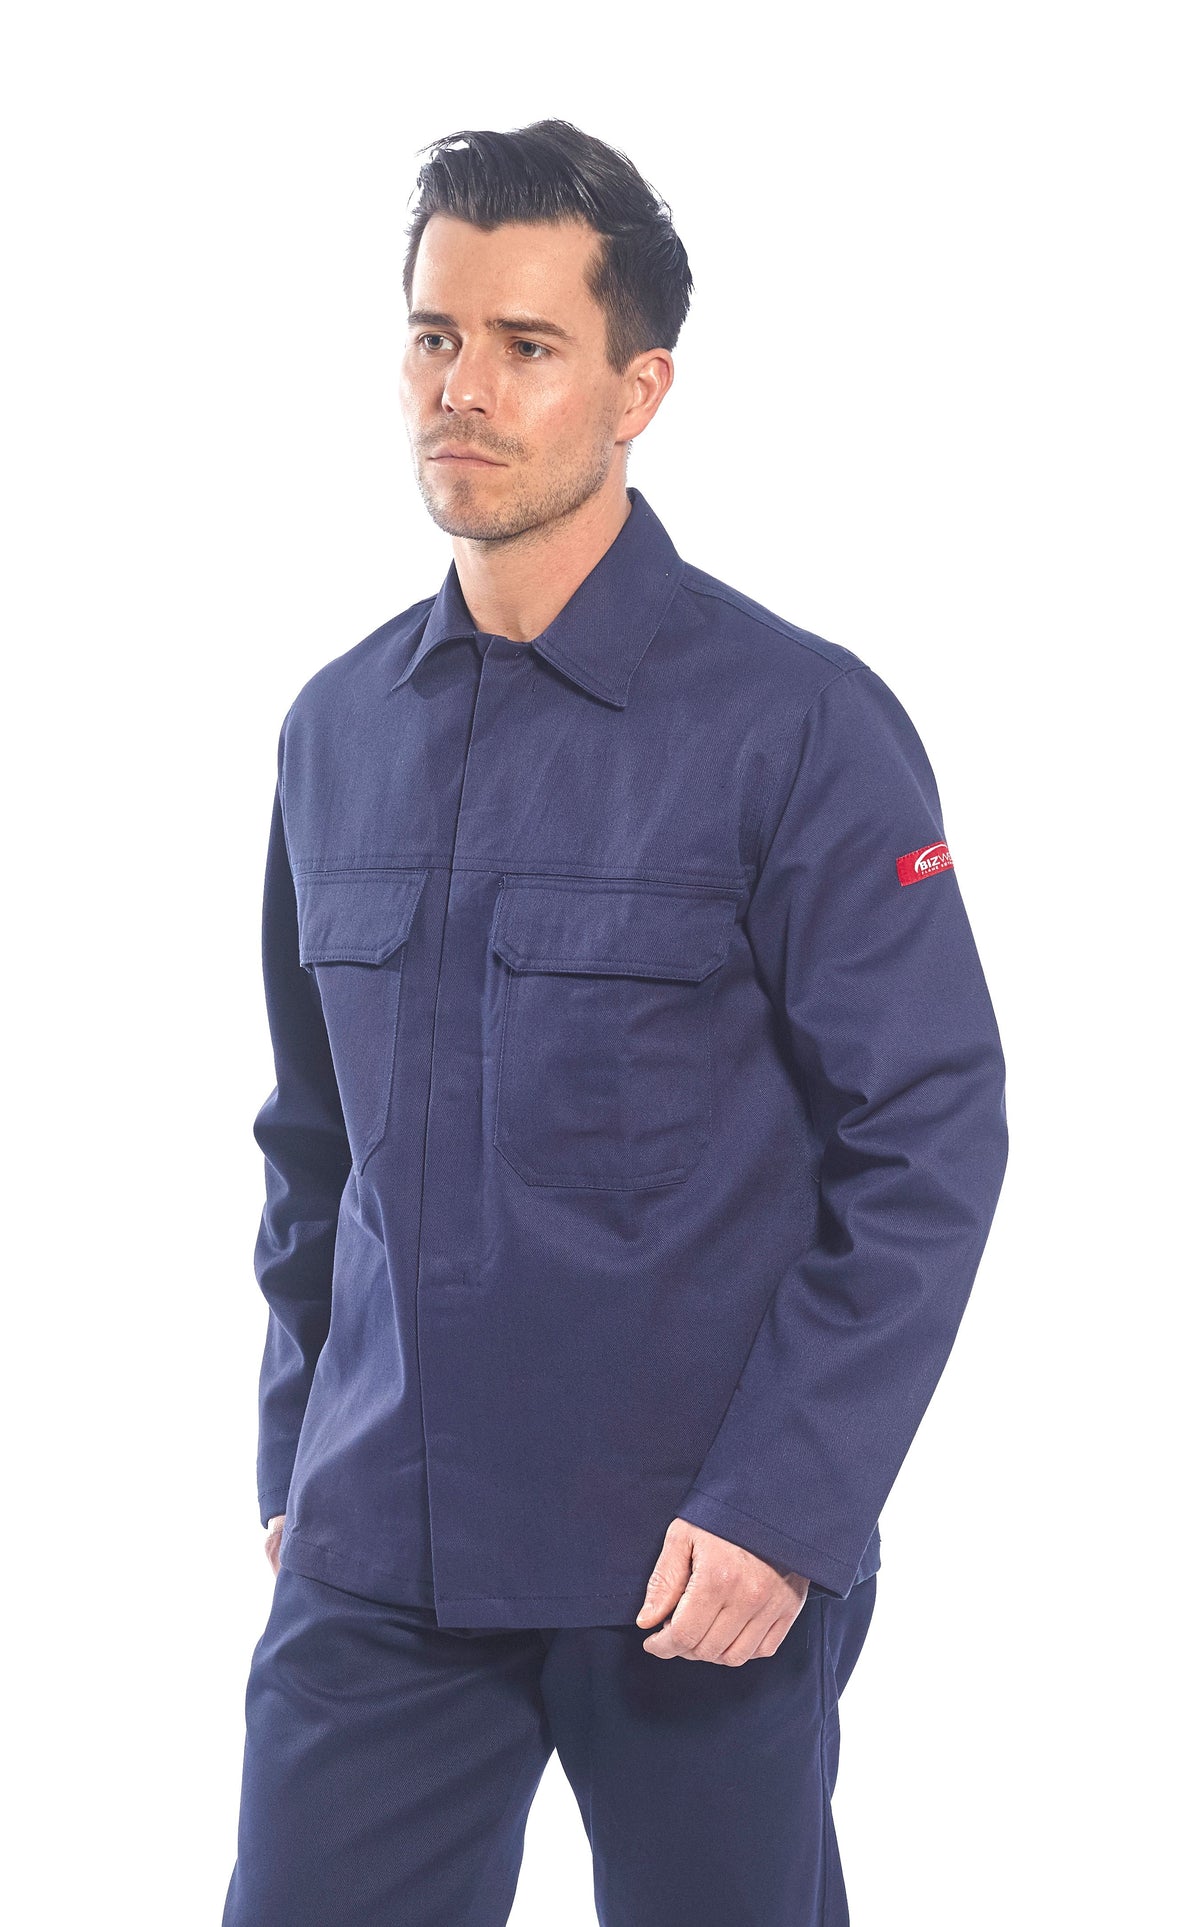 Portwest Bizweld BIZ2 Flame Resistant Welding Workwear Hazard Protection Jacket - Hamtons Direct